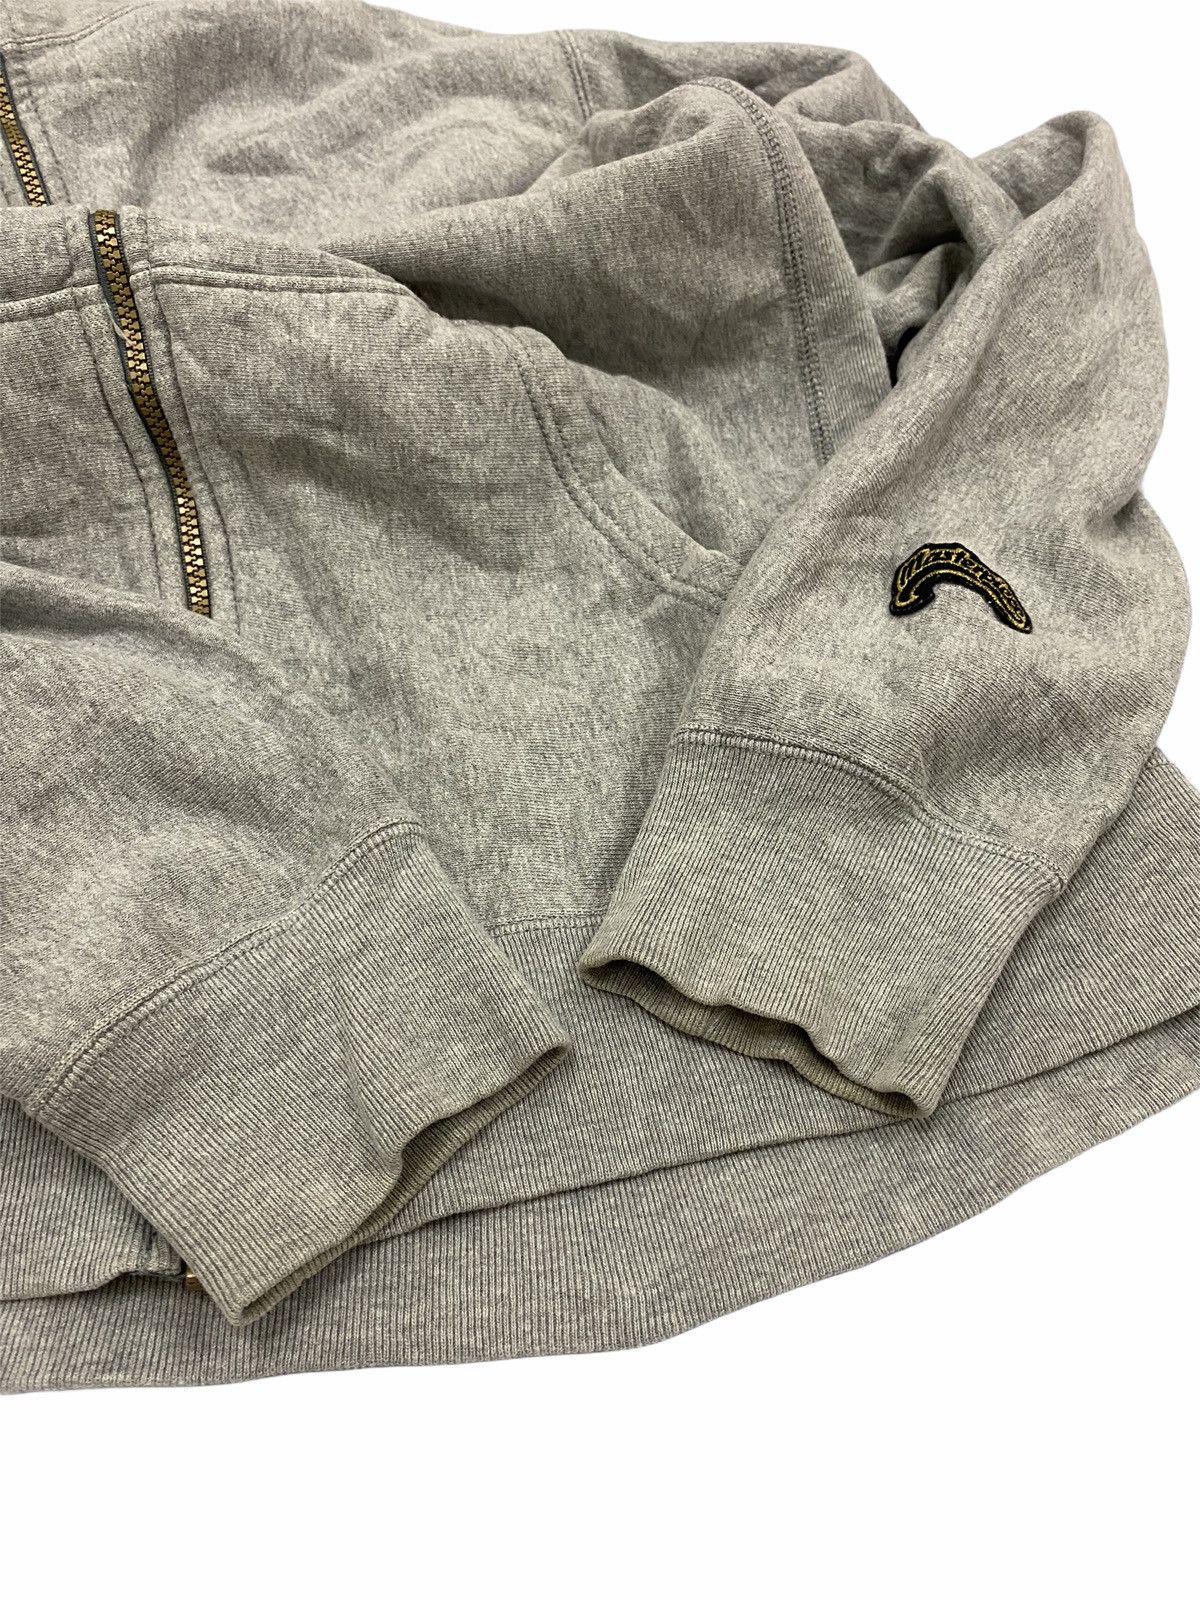 MasterPiece Master Piece Full zipper hoodie heavy sweatshirt Size US L / EU 52-54 / 3 - 5 Thumbnail